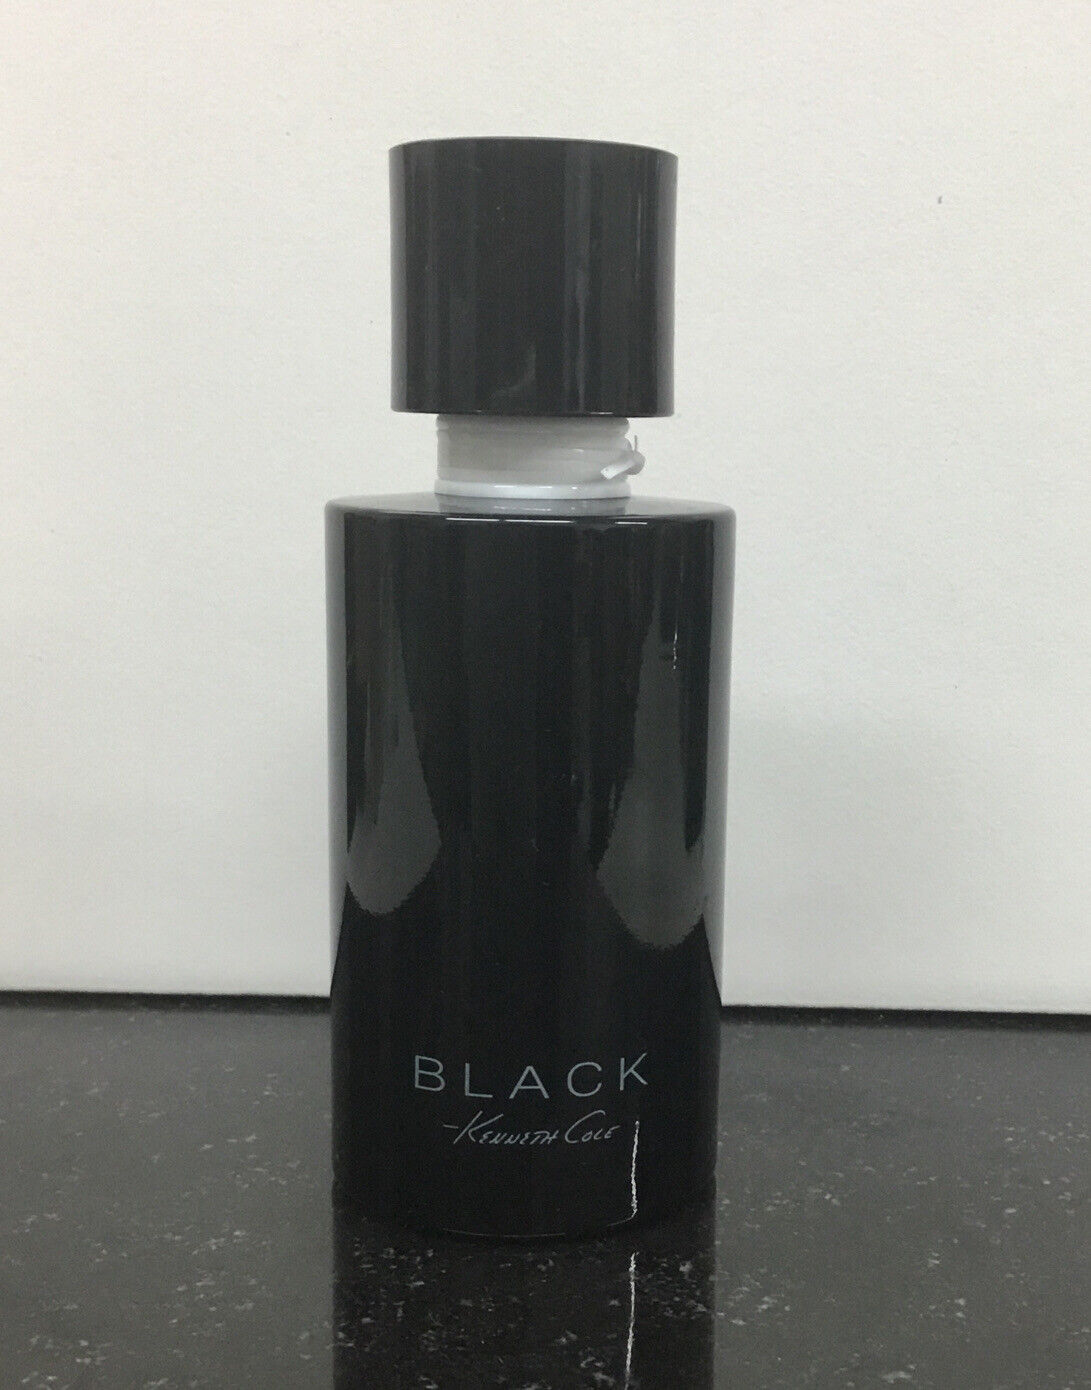 BLACK- kenneth Cole- Eau de Parfum Spray- 3.4 oz